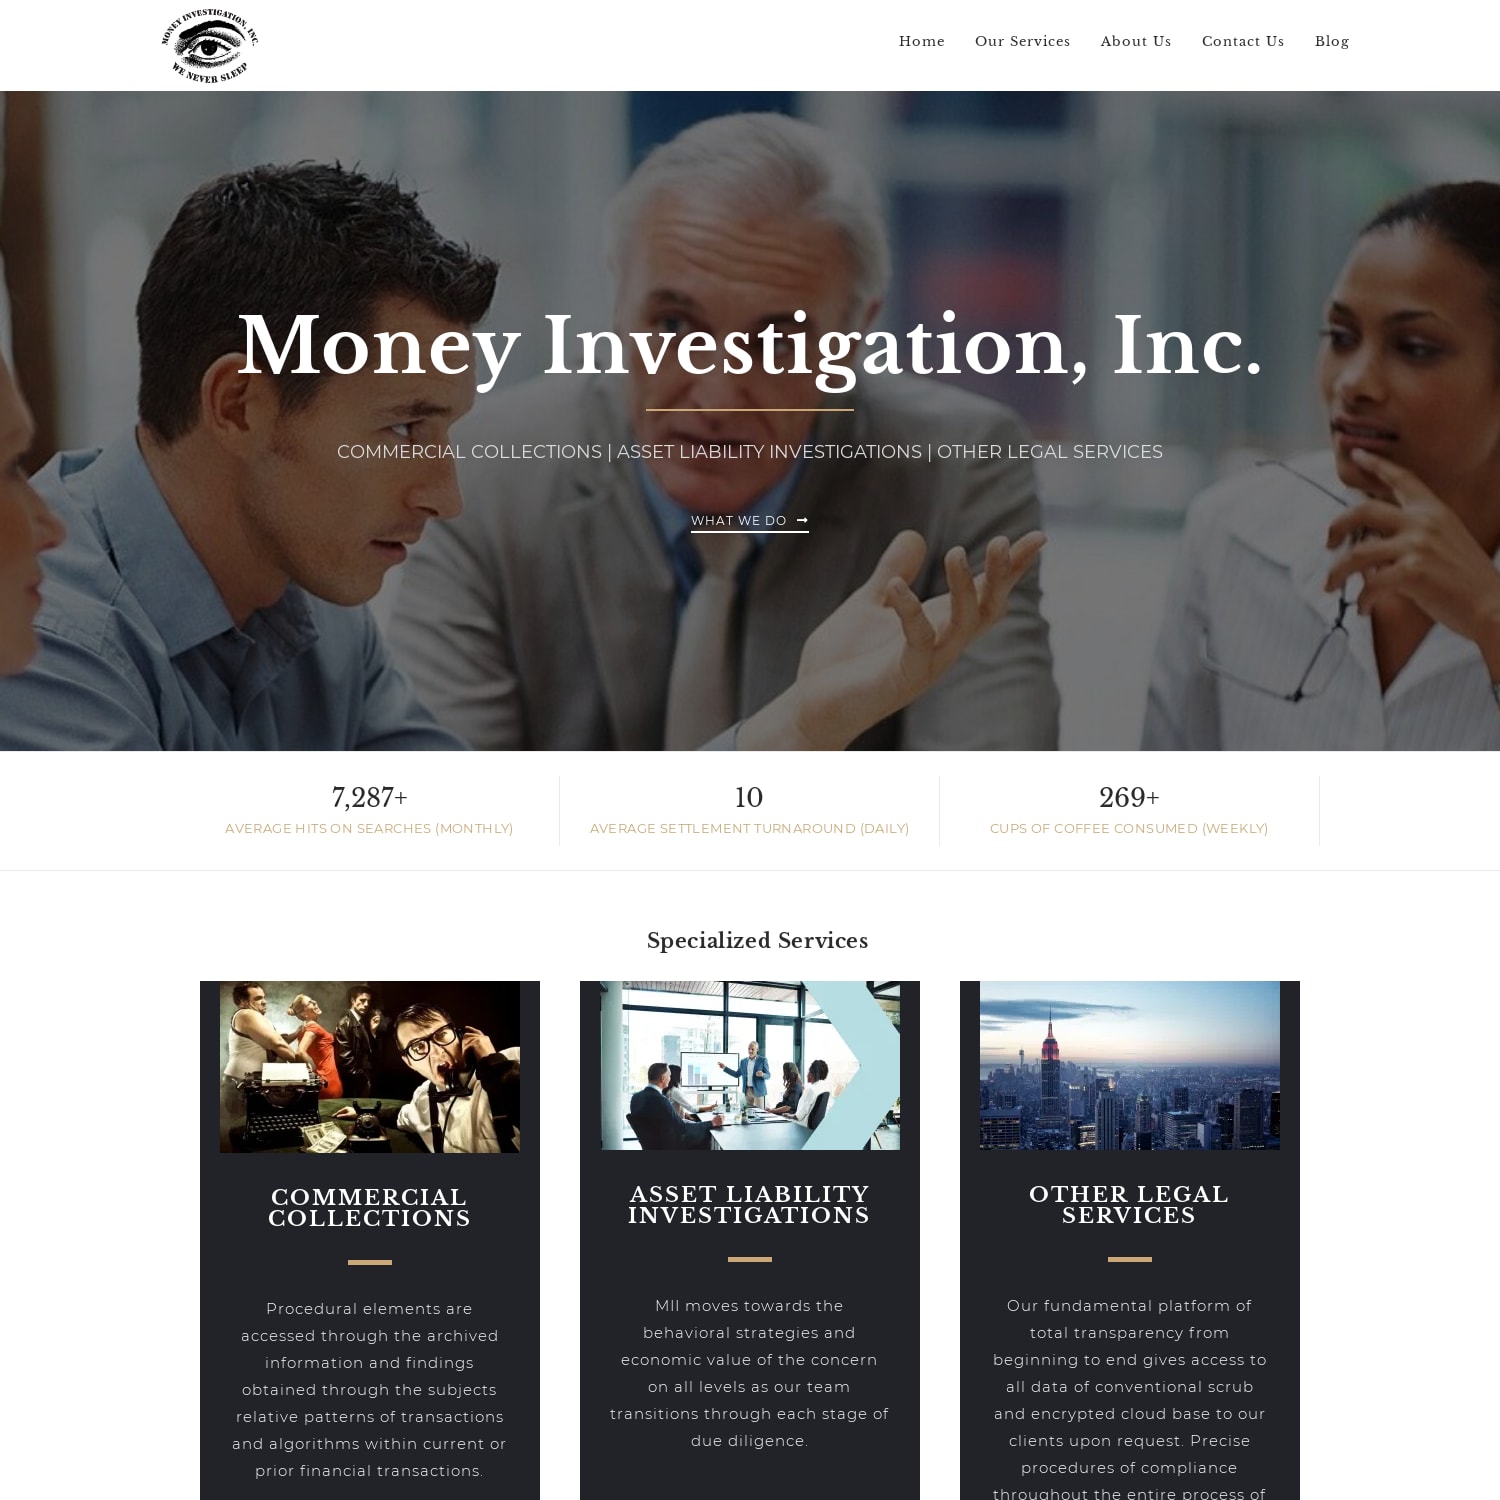 Home - Money Investigation, Inc